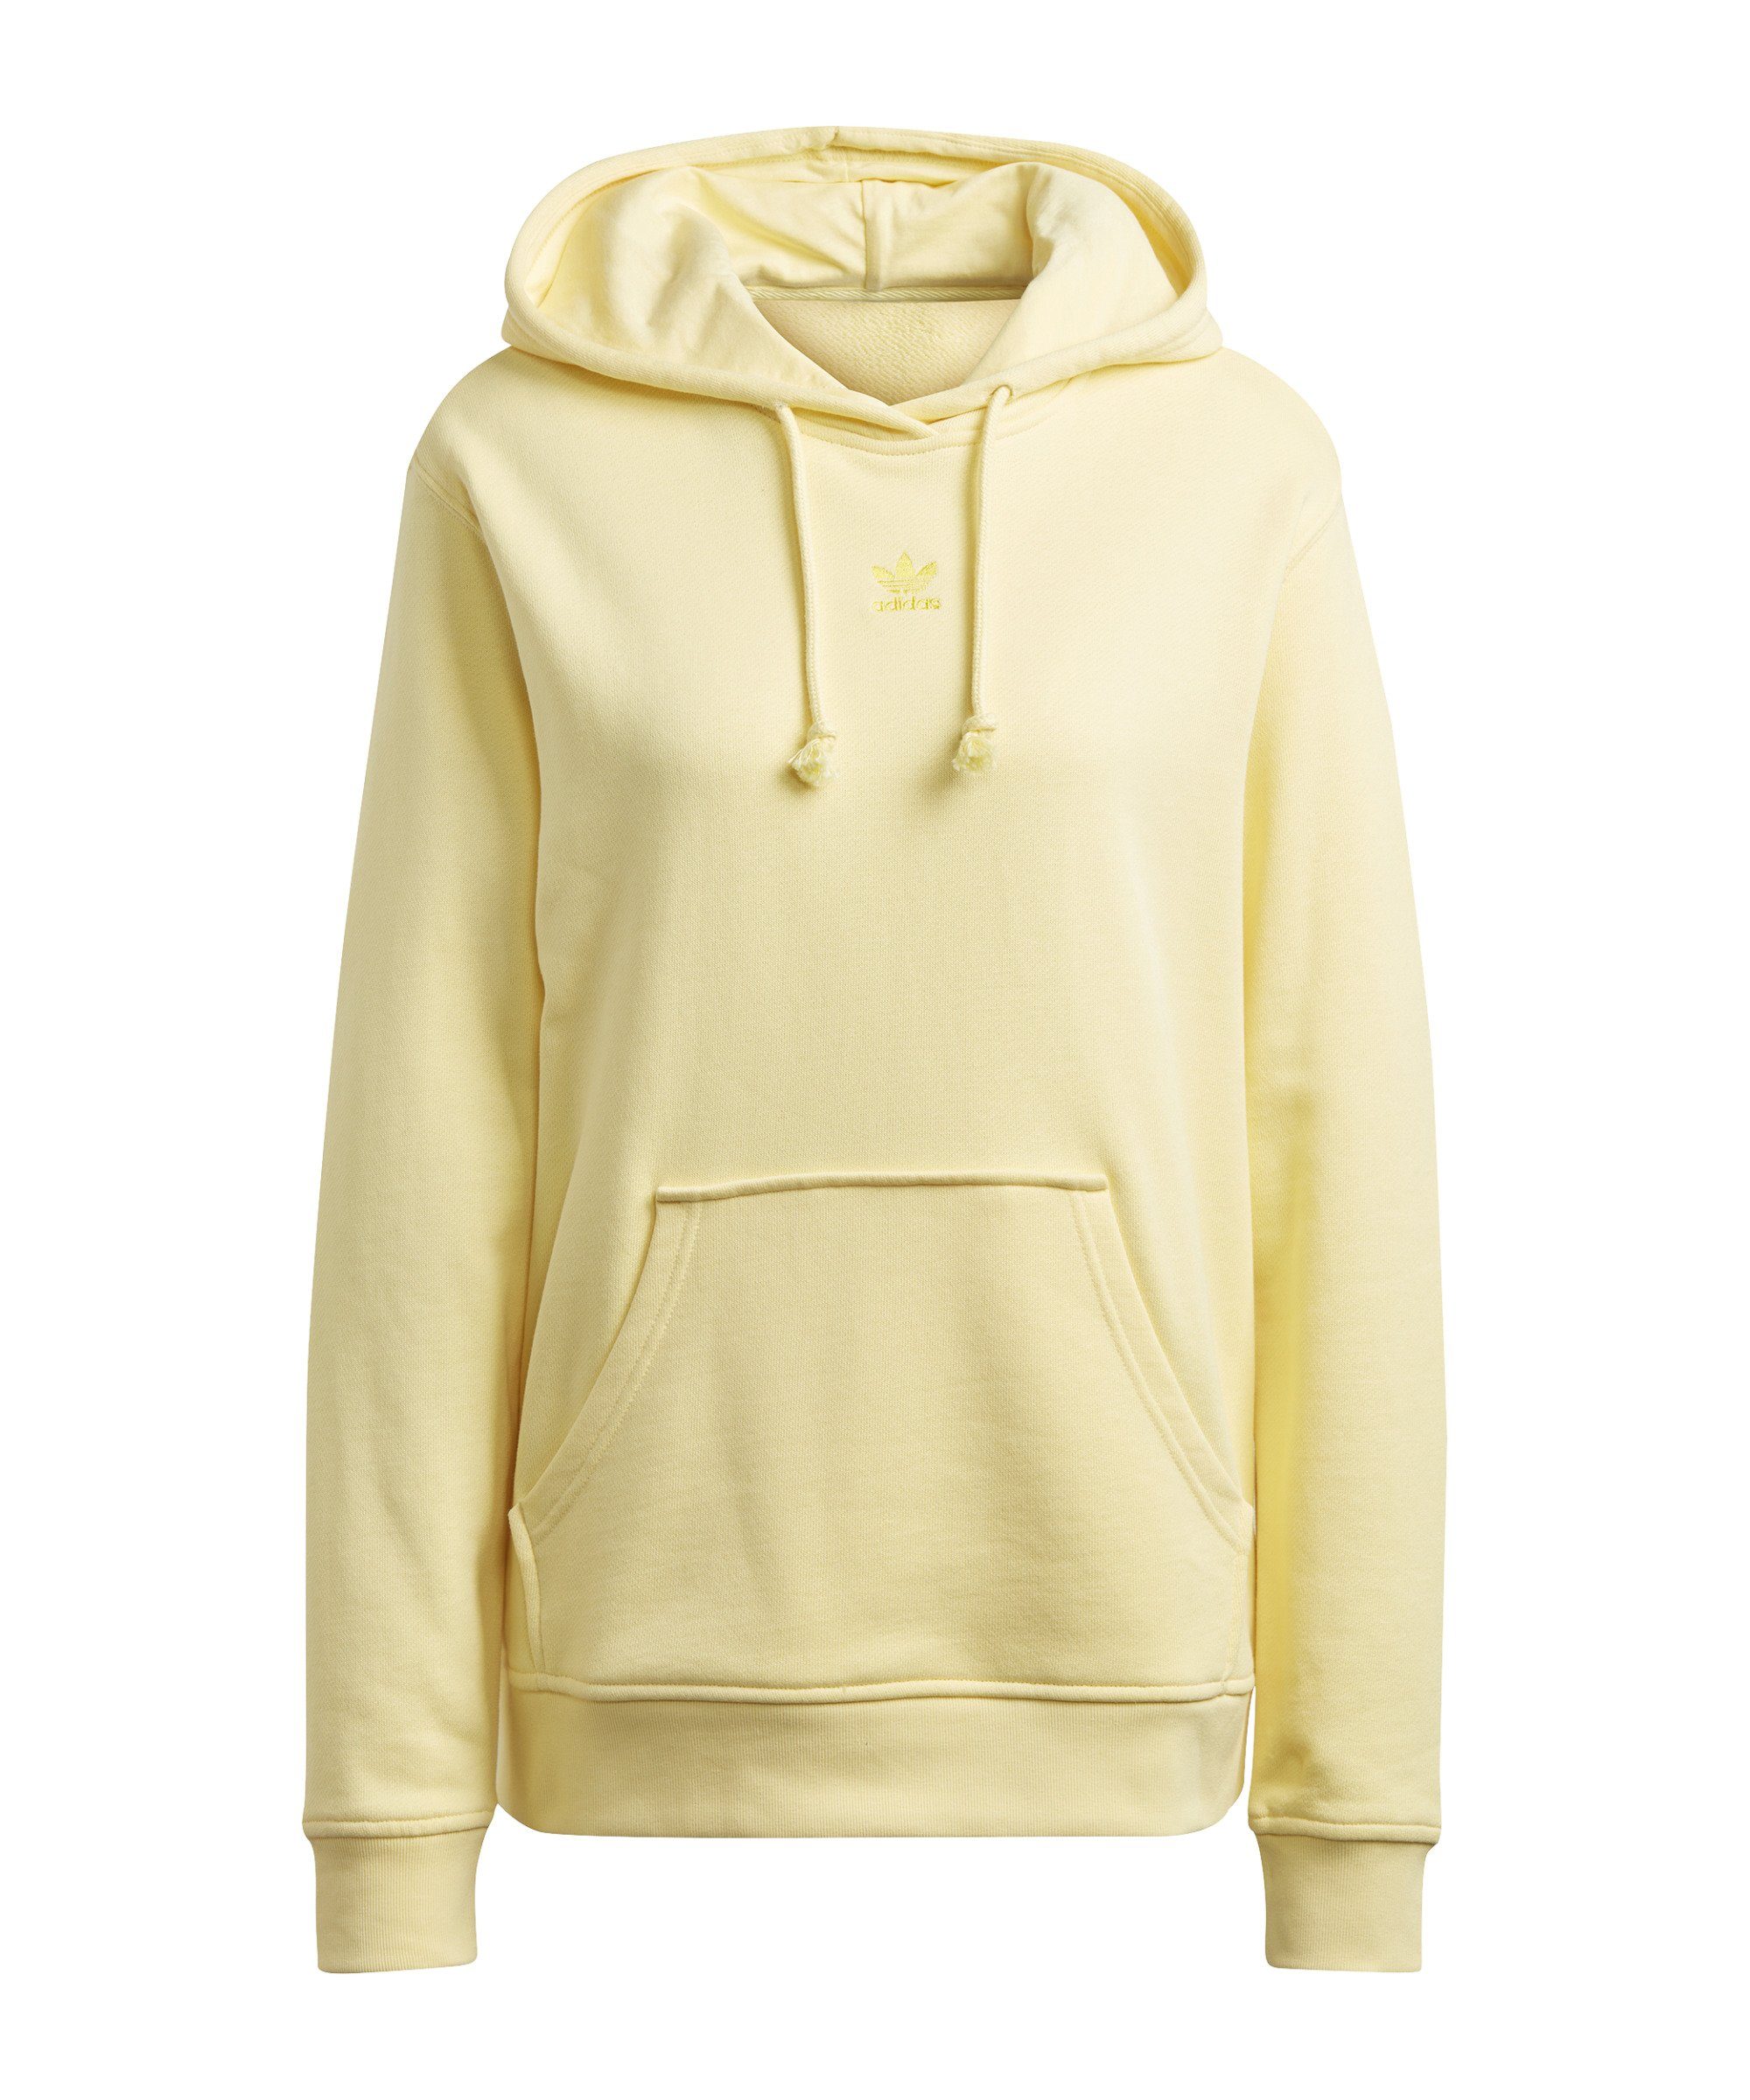 adidas Originals Sweater Hoody Damen gelb